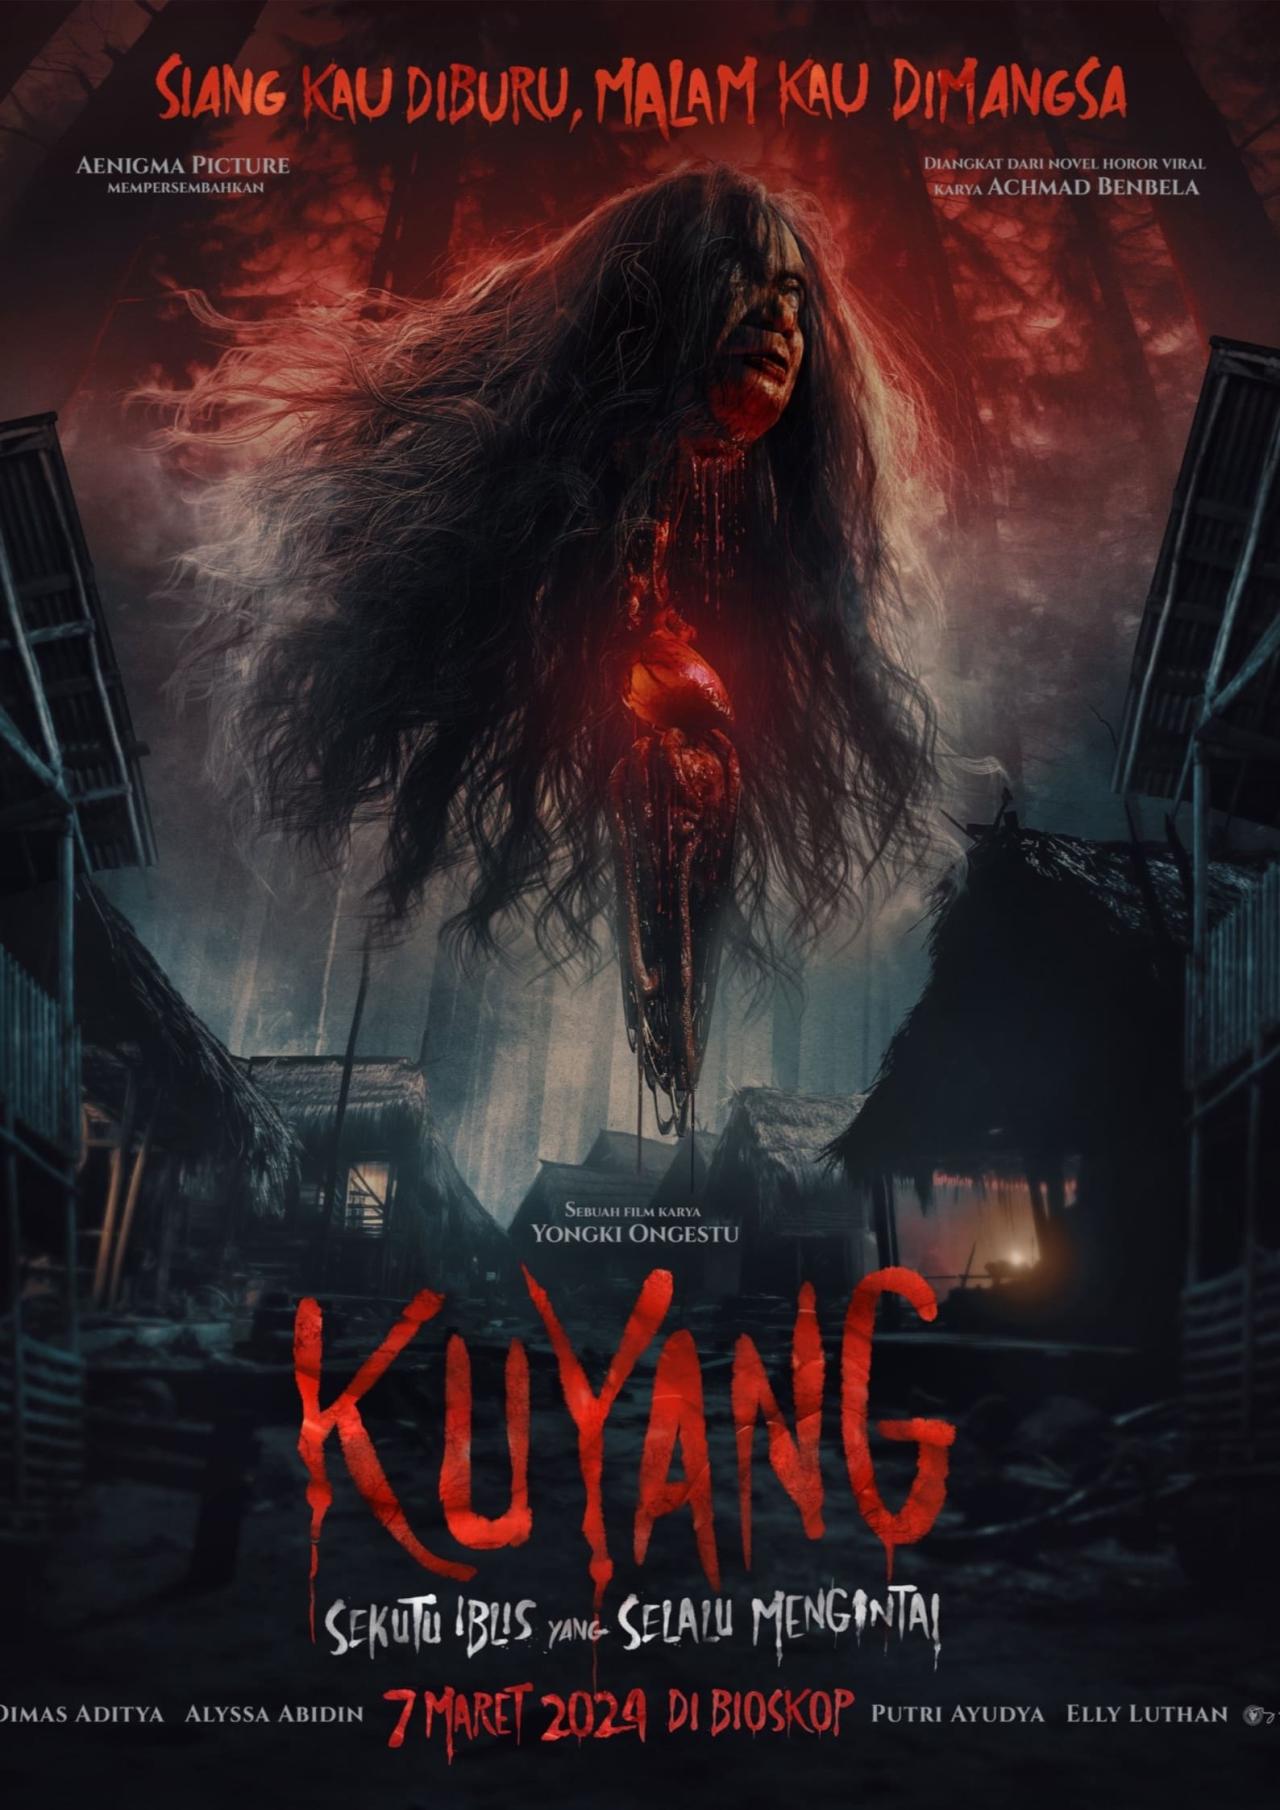 Kuyang: Sekutu Iblis Yang Selalu Mengintai est-il disponible sur Netflix ou autre ?